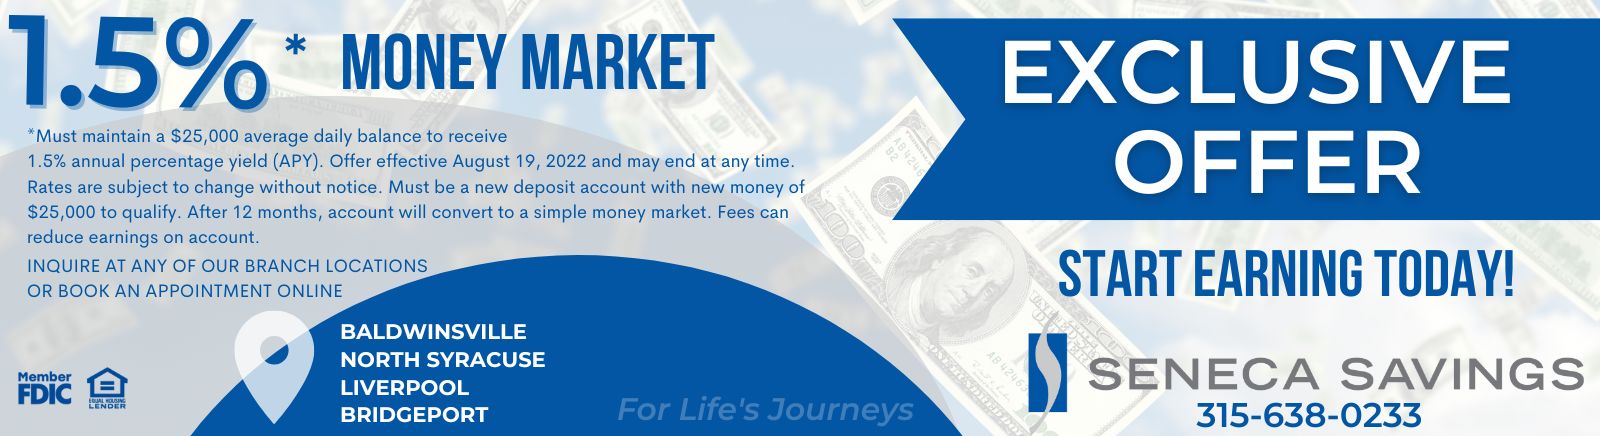 money market with seneca savings